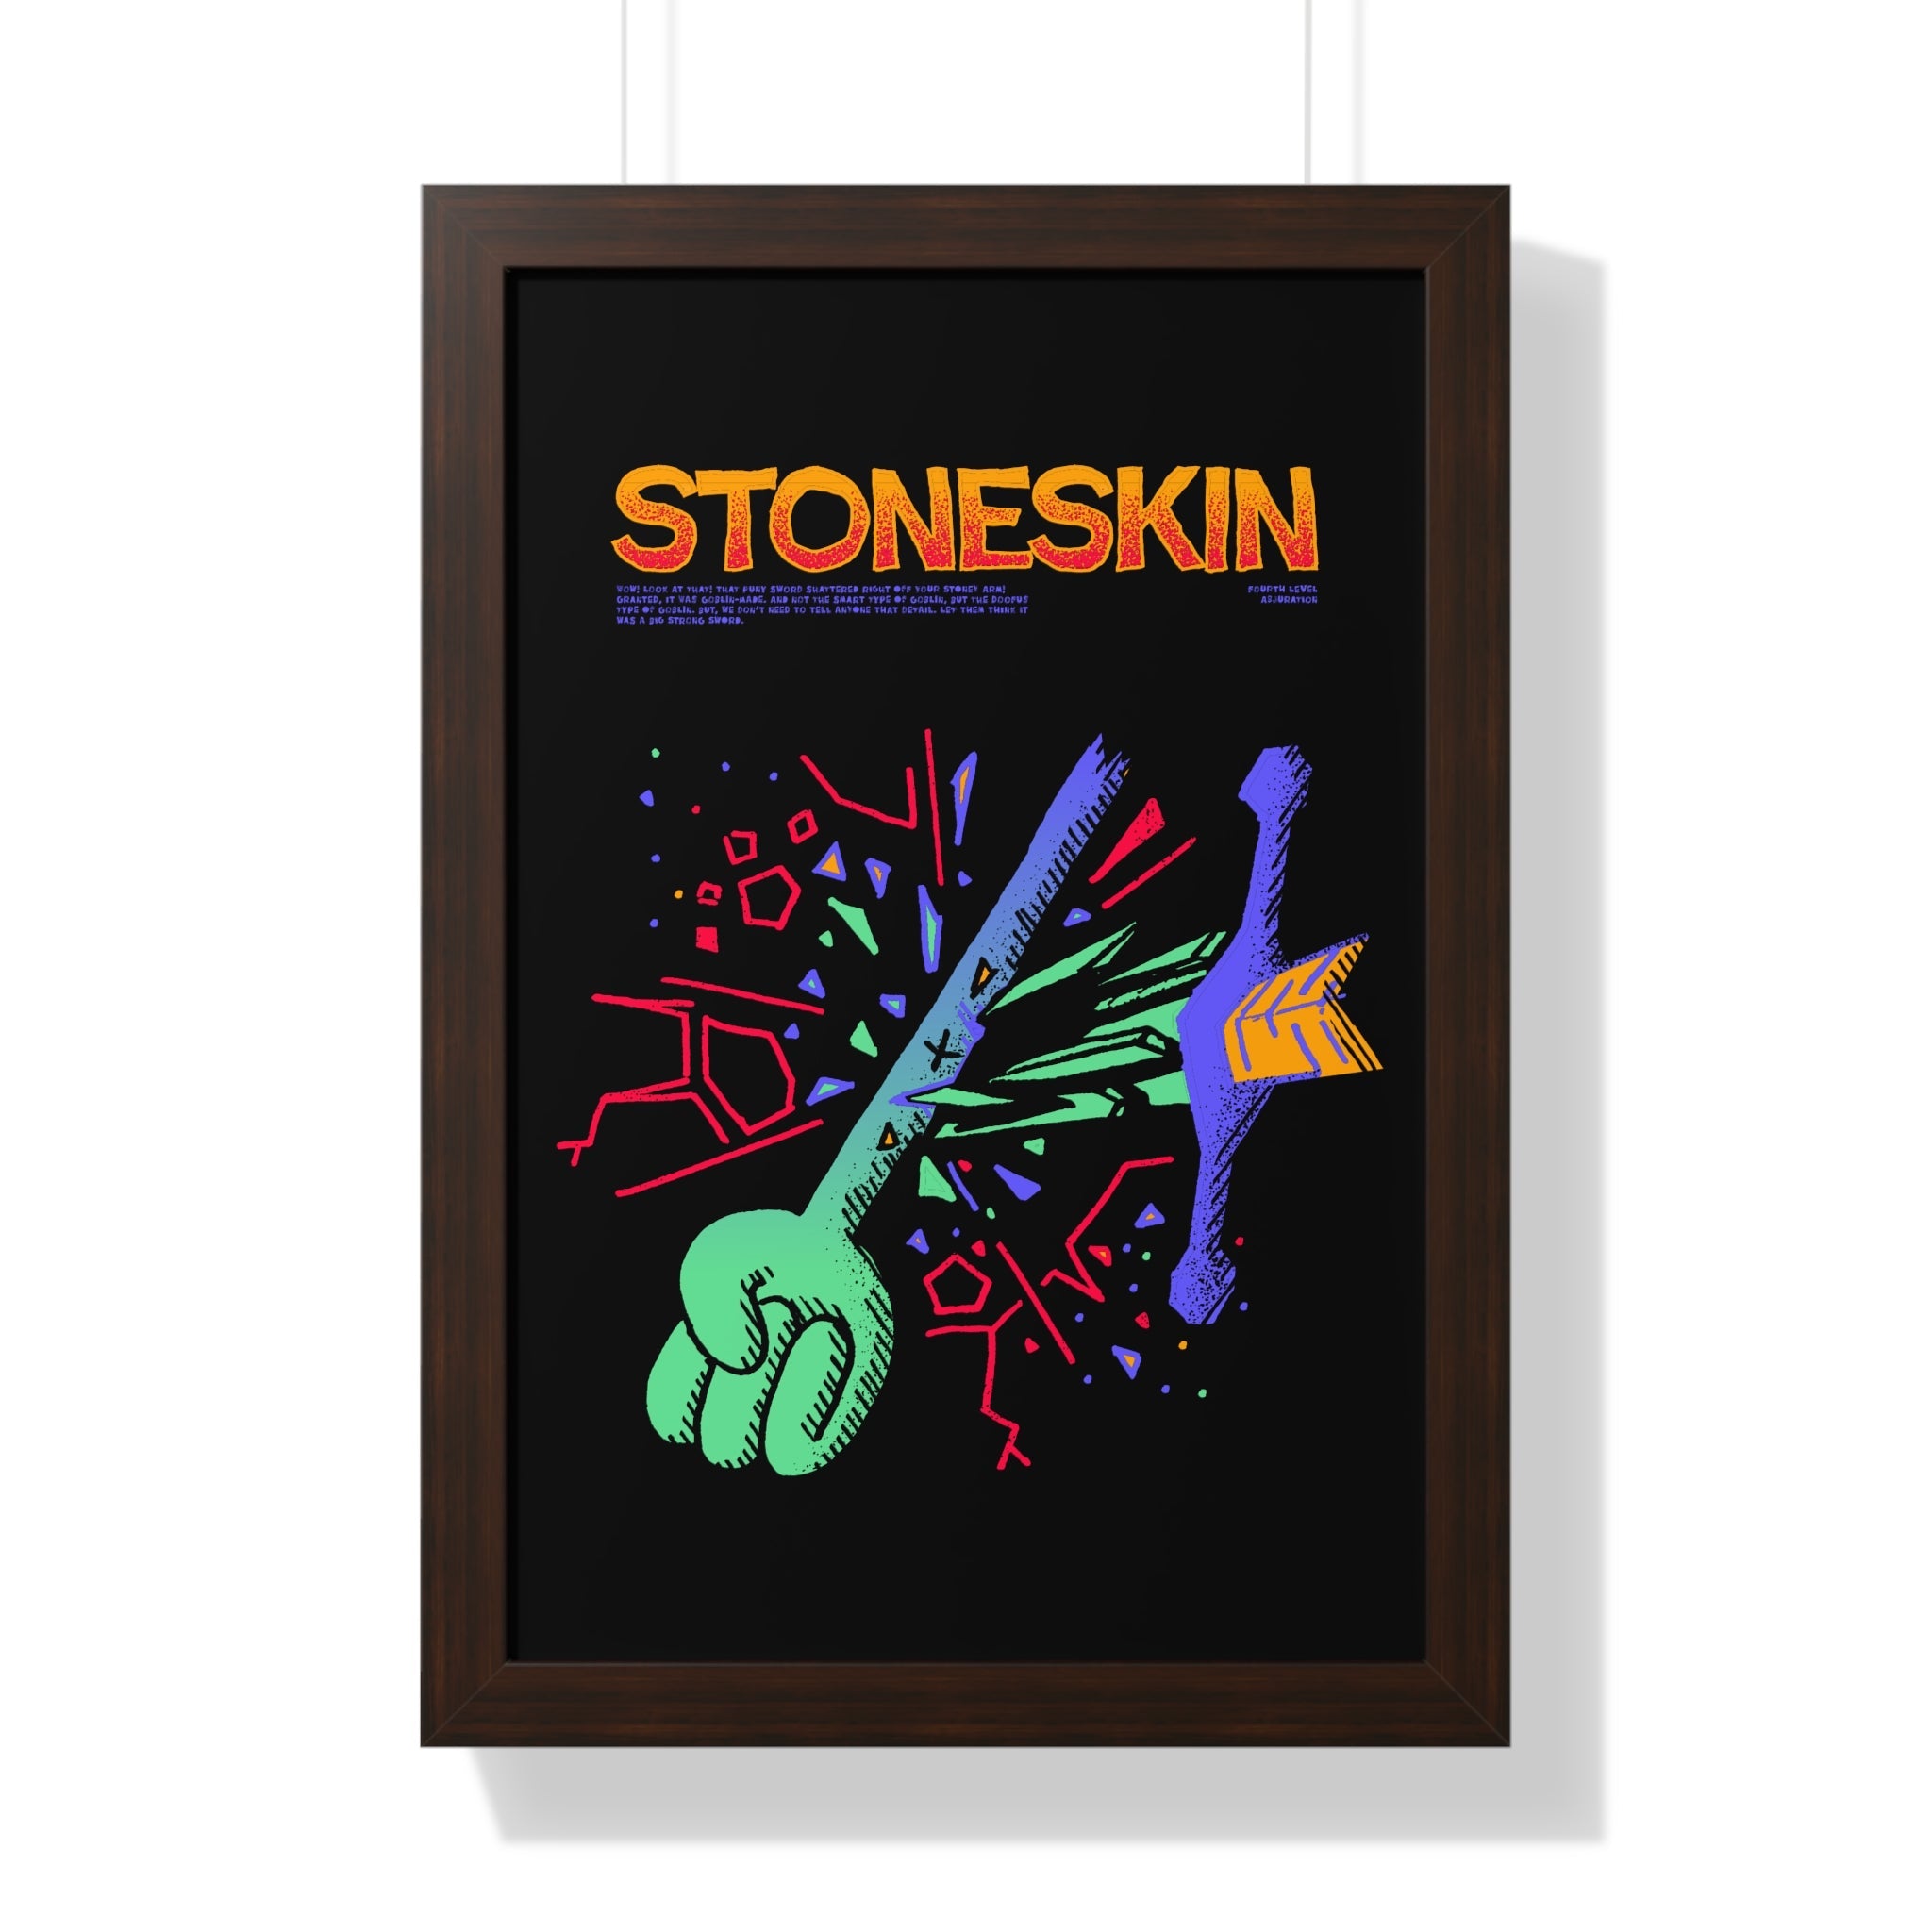 Stoneskin | Framed Poster - Framed Poster - Ace of Gnomes - 29061417992003132706